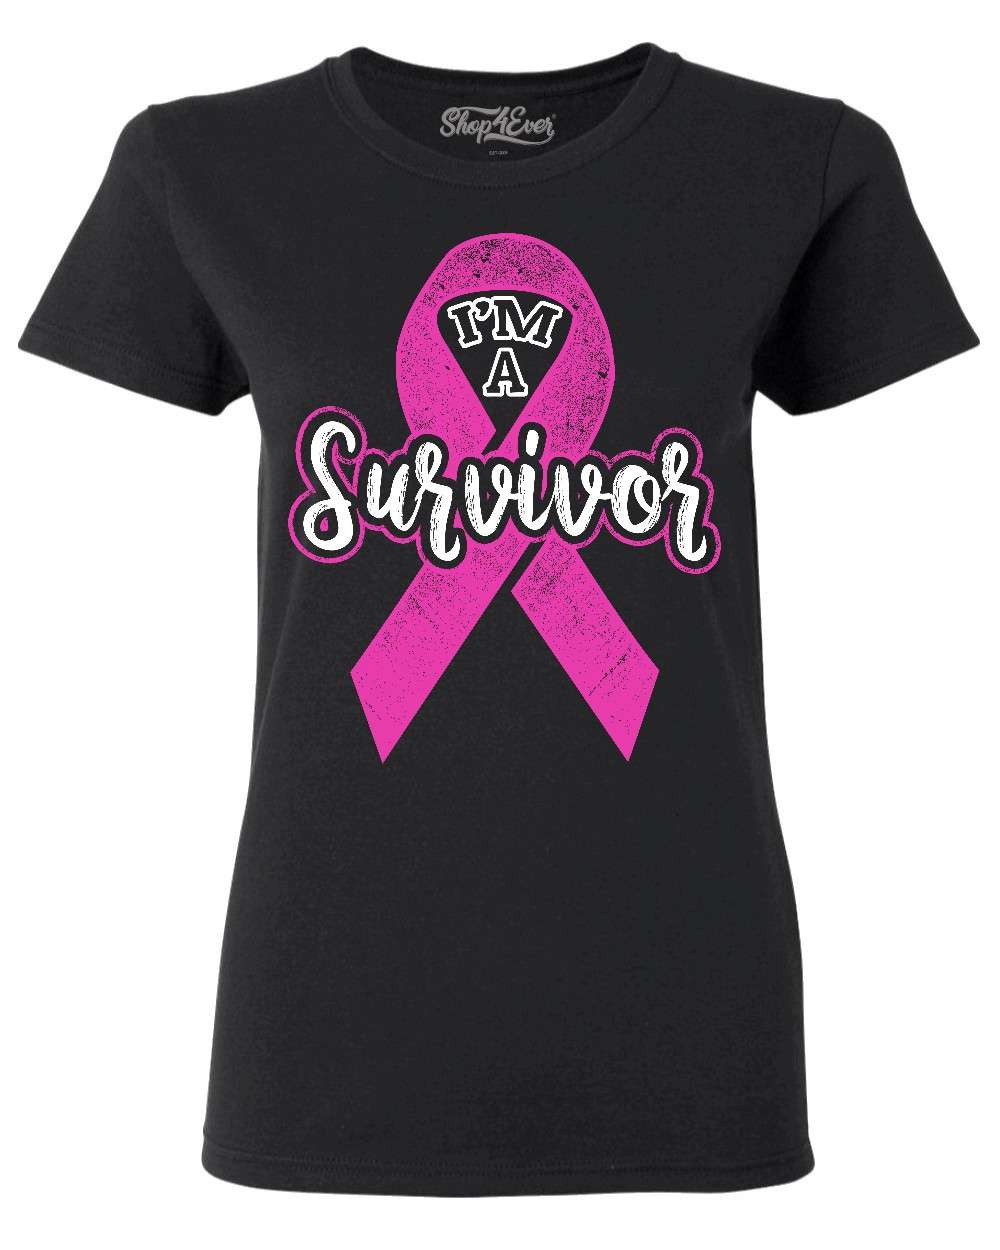 Cancer Picked the Wrong Girl Shirt Pink Ribbon Shirt Breast Cancer Survivor Shirt Breast Cancer Awareness Shirt Clothing Gender-Neutral Adult Clothing Tops & Tees T-shirts 